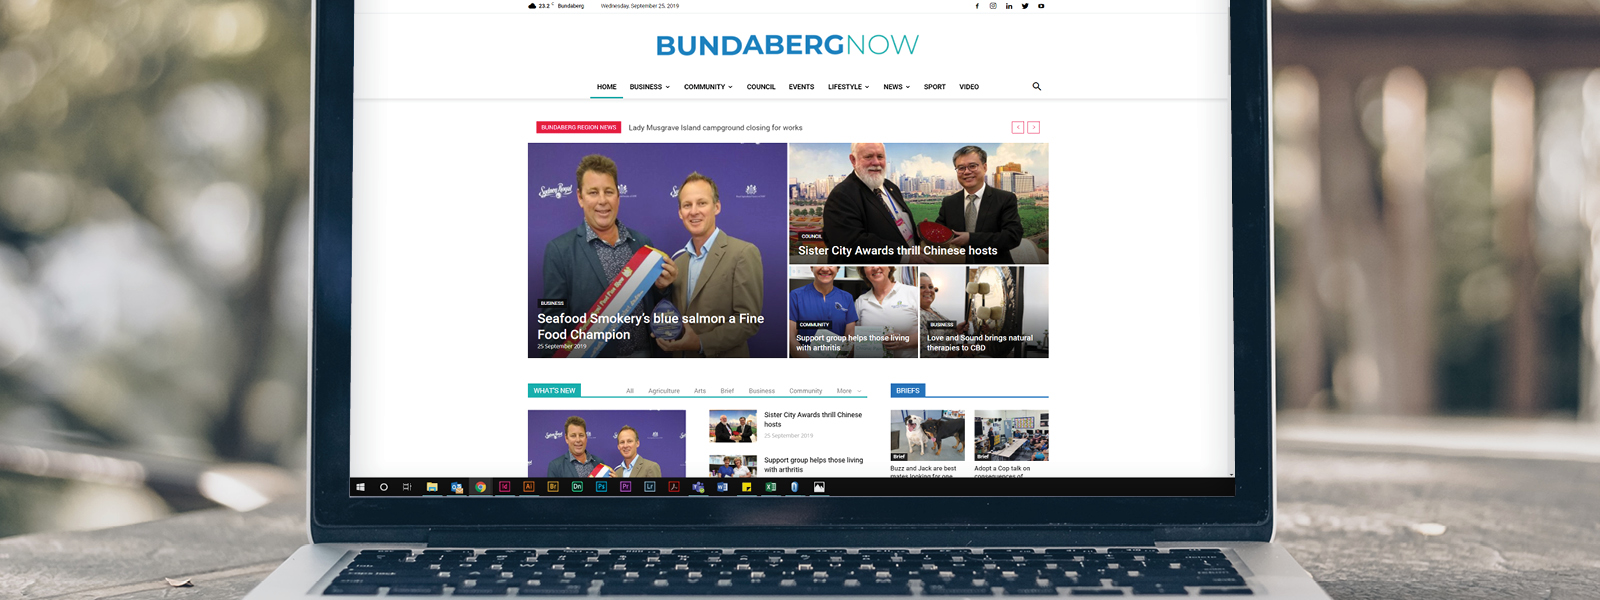 Bundaberg now on laptop 1